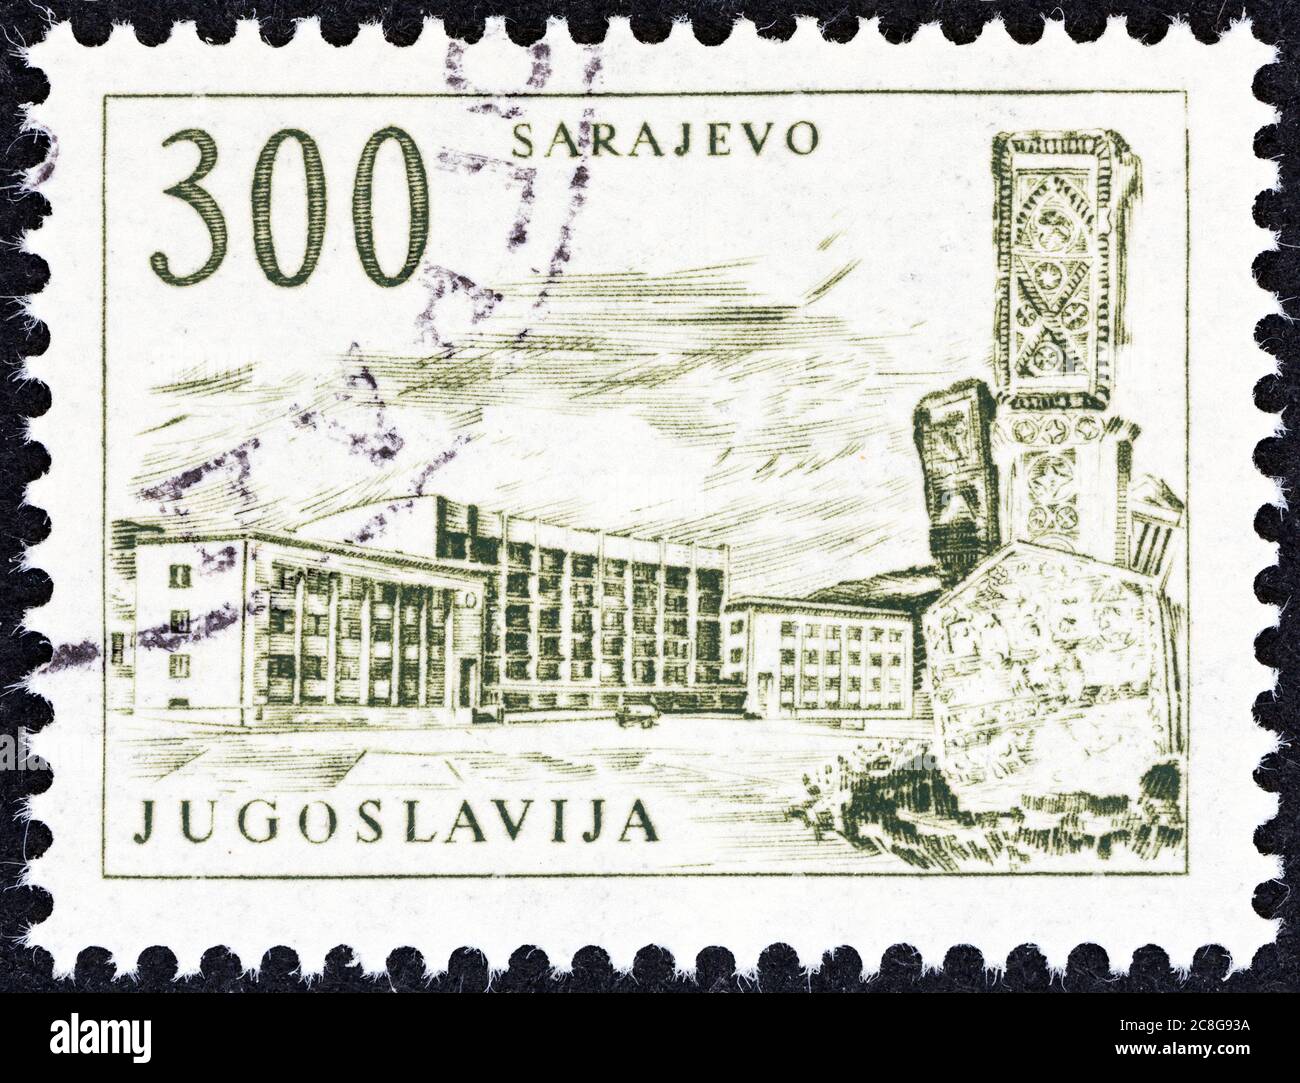 YUGOSLAVIA - CIRCA 1958: A stamp printed in Yugoslavia shows Sarajevo railway station and obelisk, Bosnia and Herzegovina, circa 1958. Stock Photo